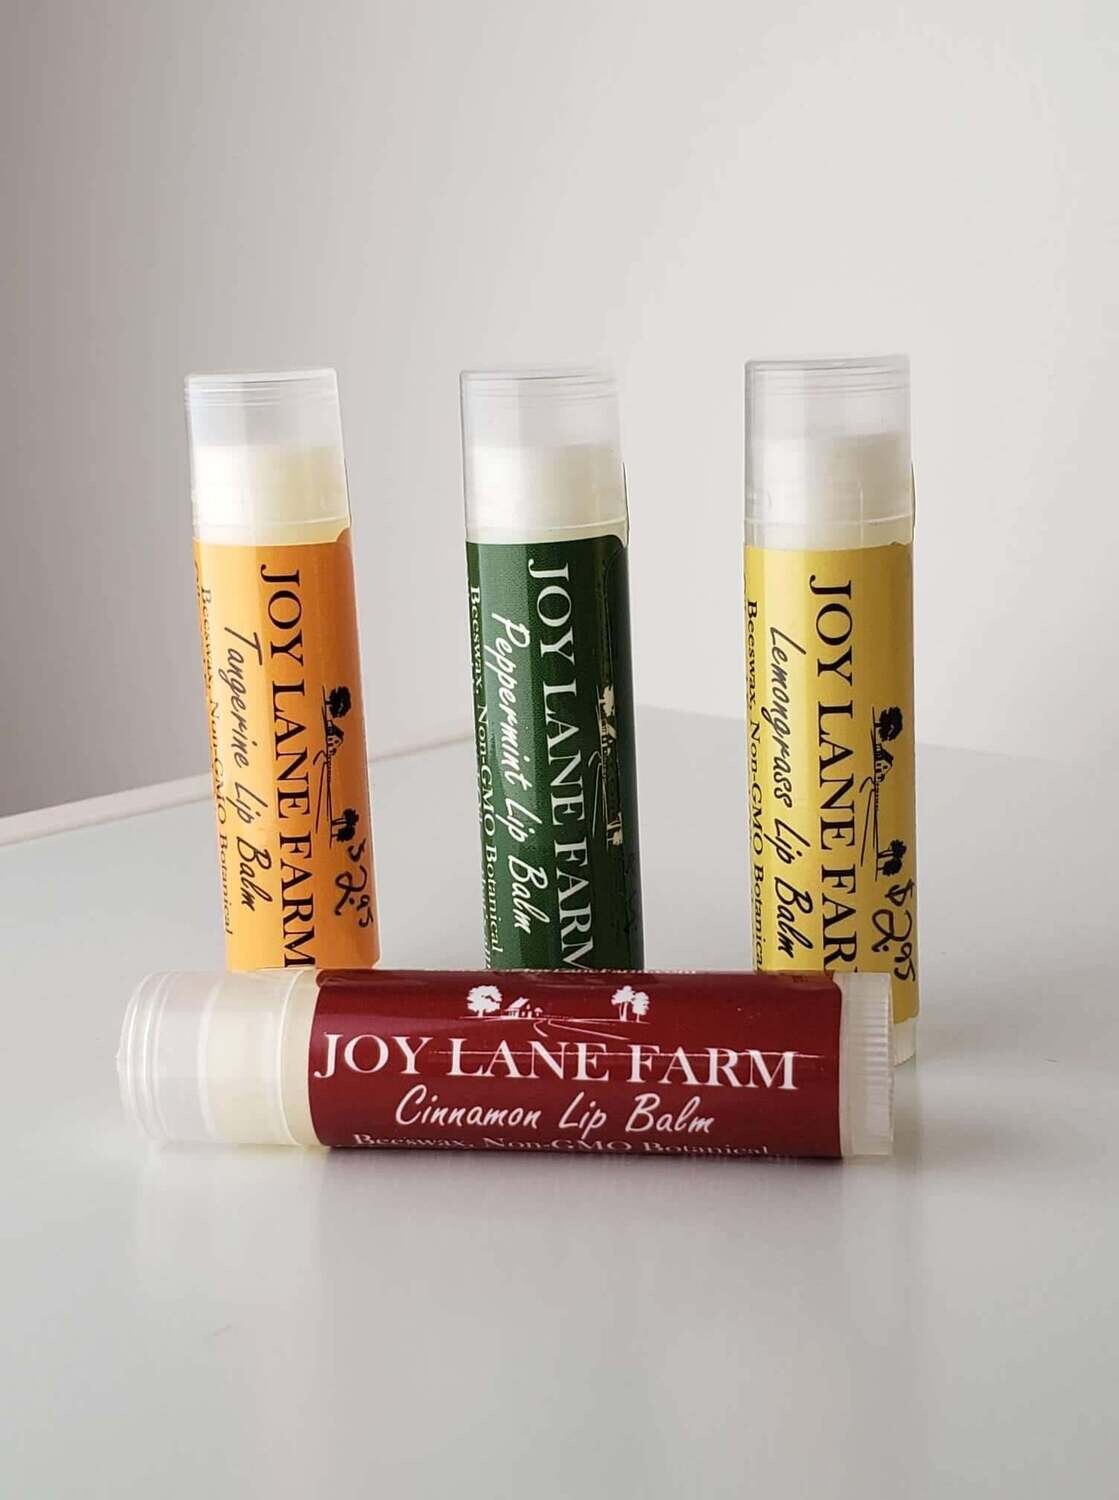 Joy Lane Farm,
Assorted Lip Balm Tubes